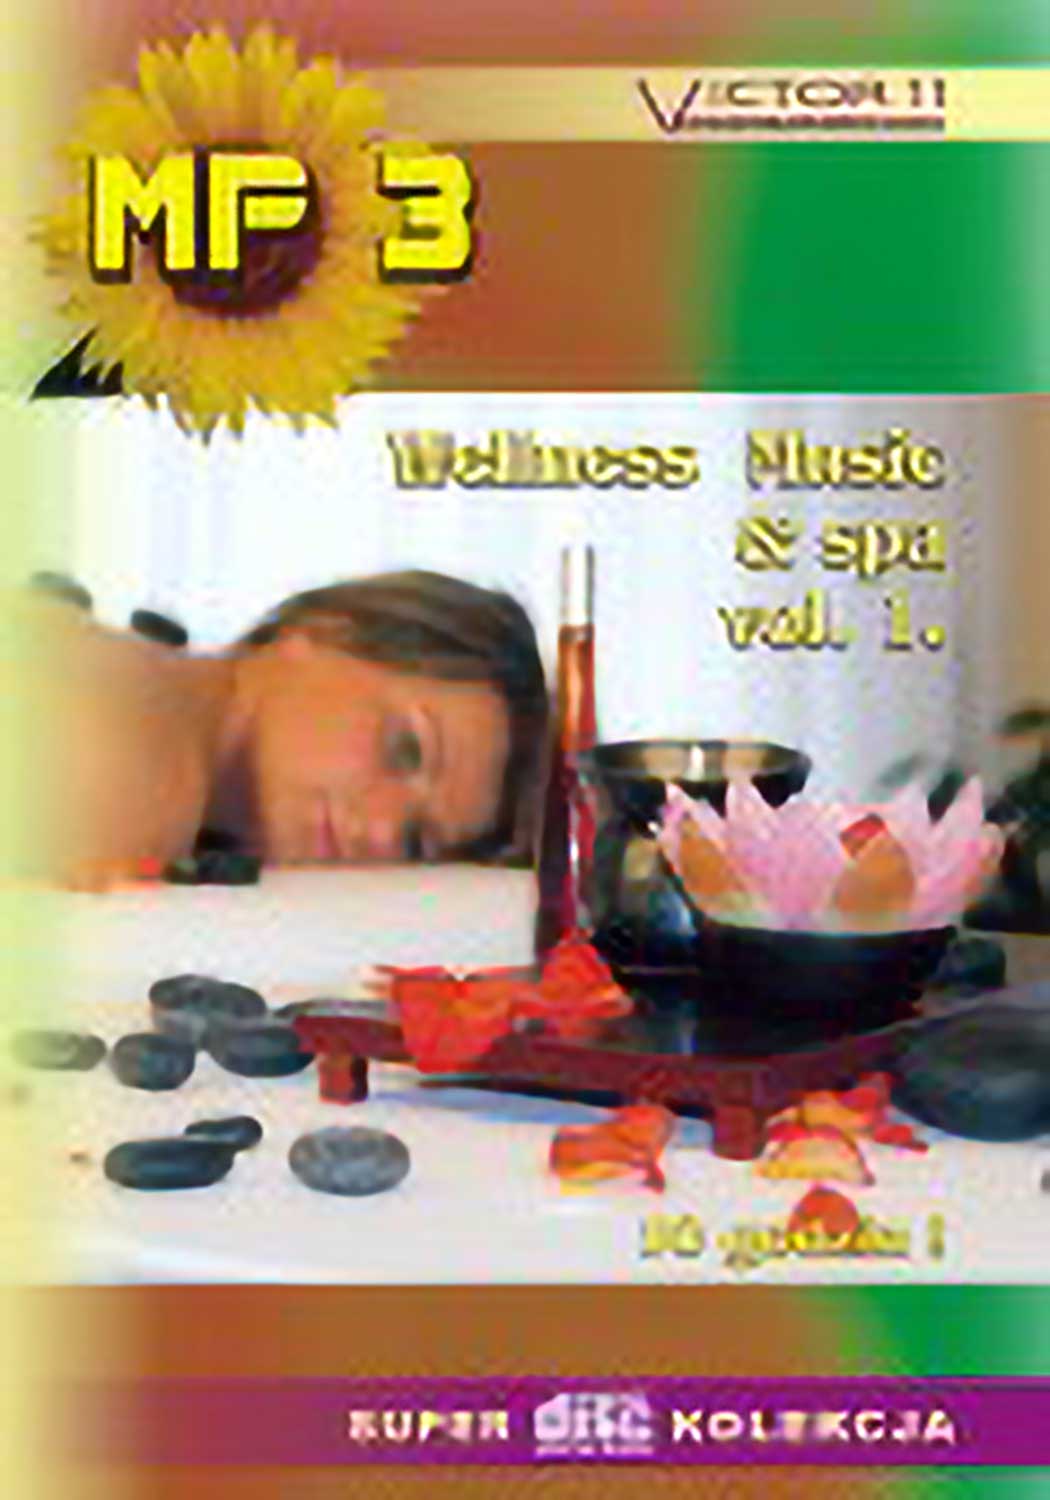 Wellness Music & Spa cz. 1